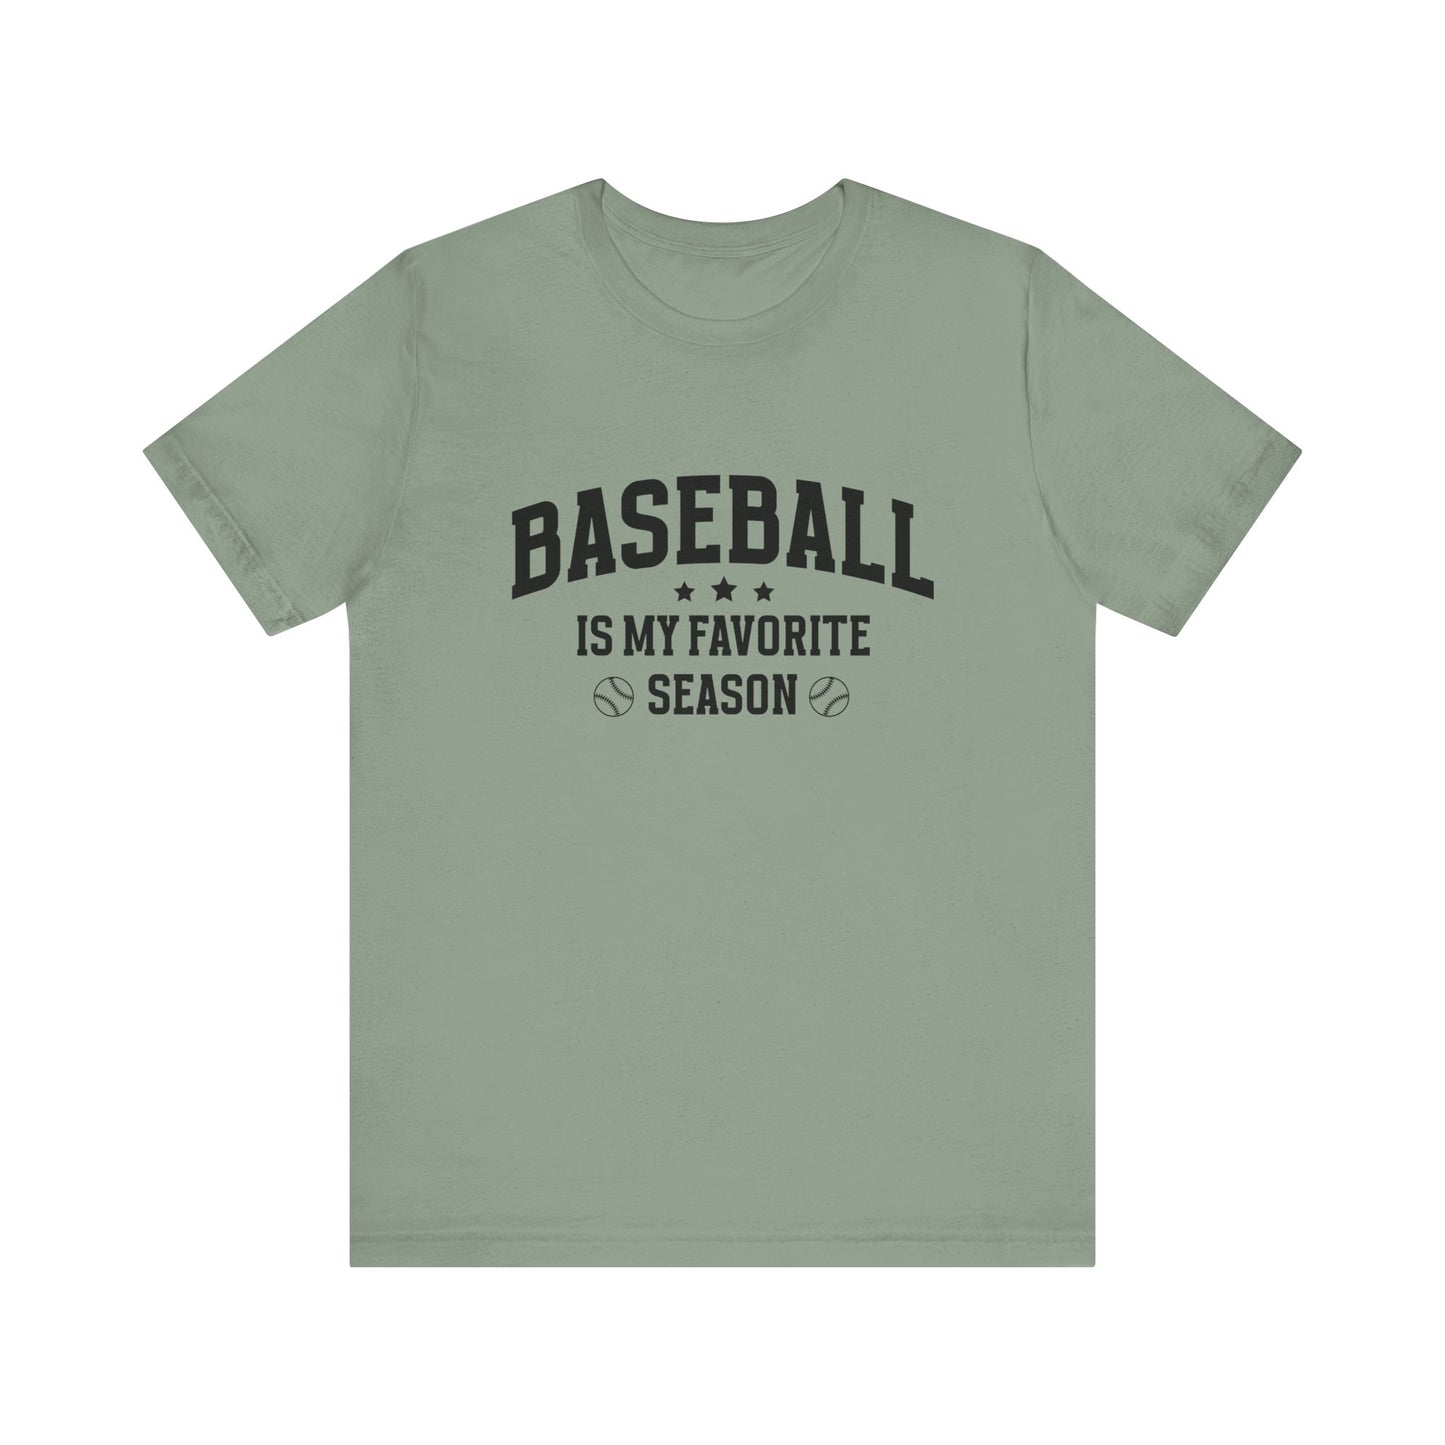 Baseball is my favorite season Adult Unisex Tshirt  Short Sleeve Tee